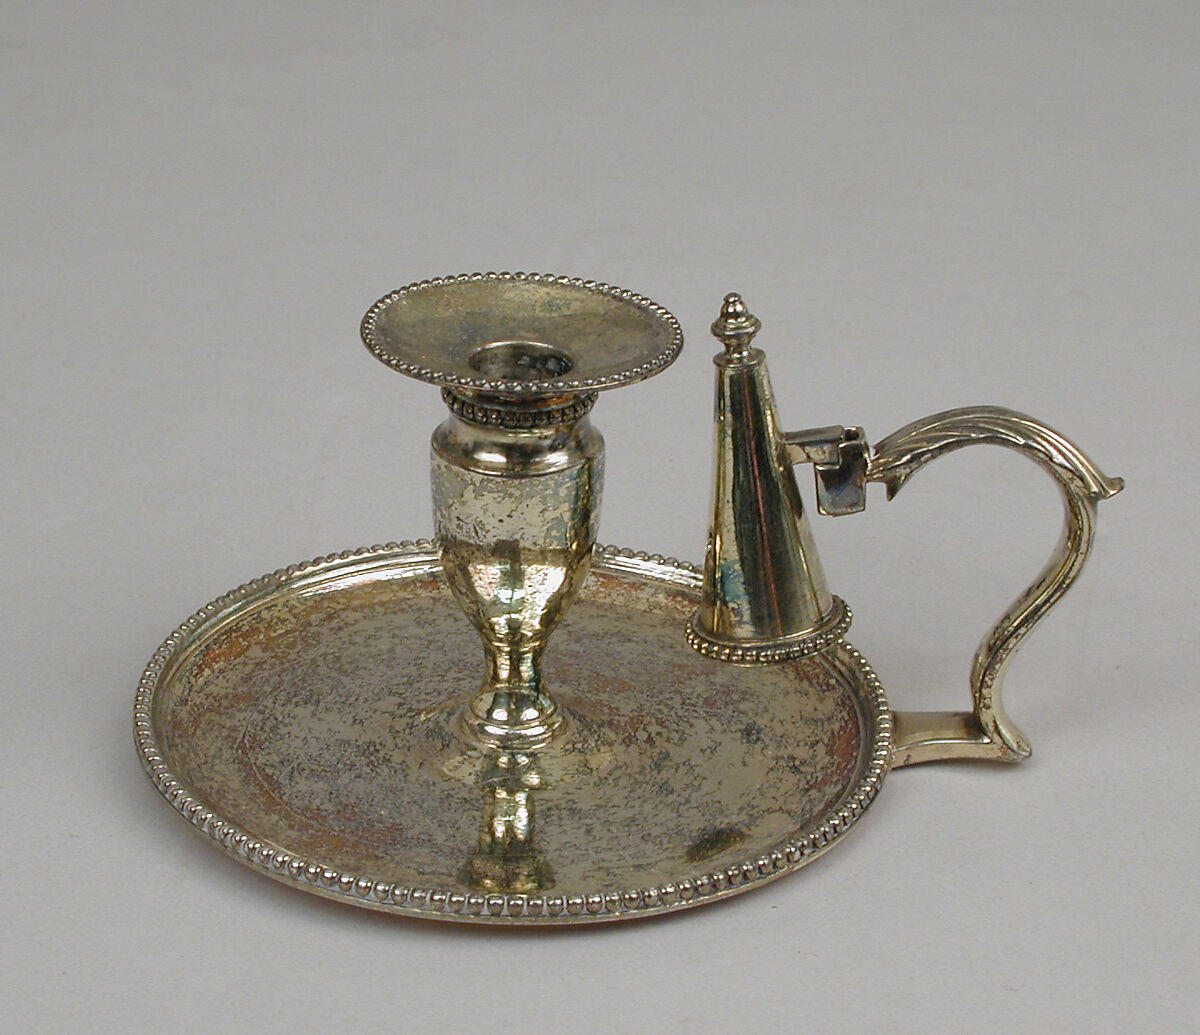 Taperstick, John Scofield (British, active 1776–96), Silver gilt, British, London 